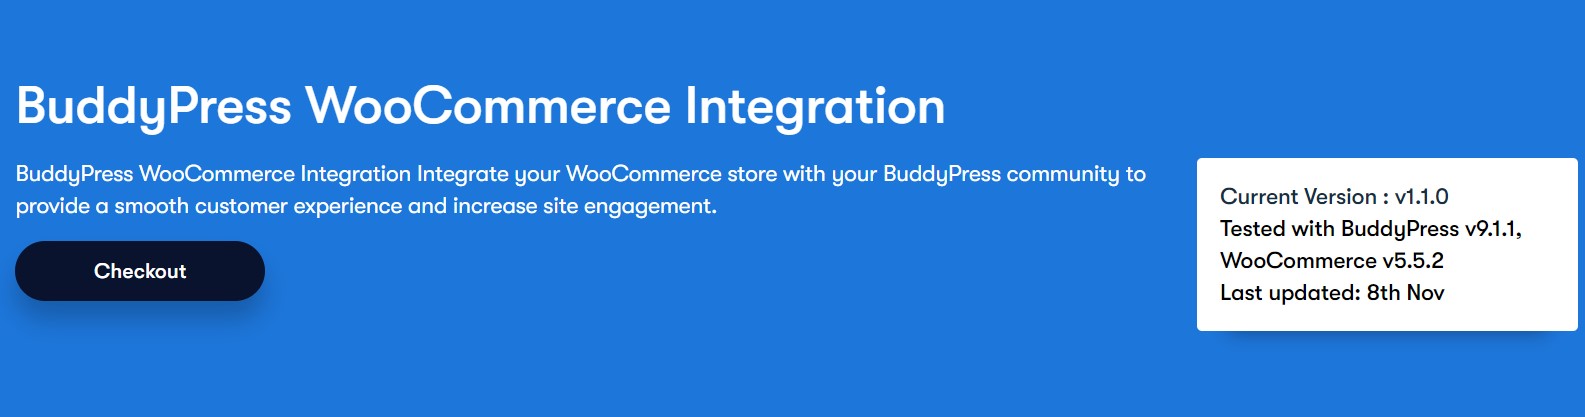 BuddyPress WooCommerce Integration by Wbcom Designs